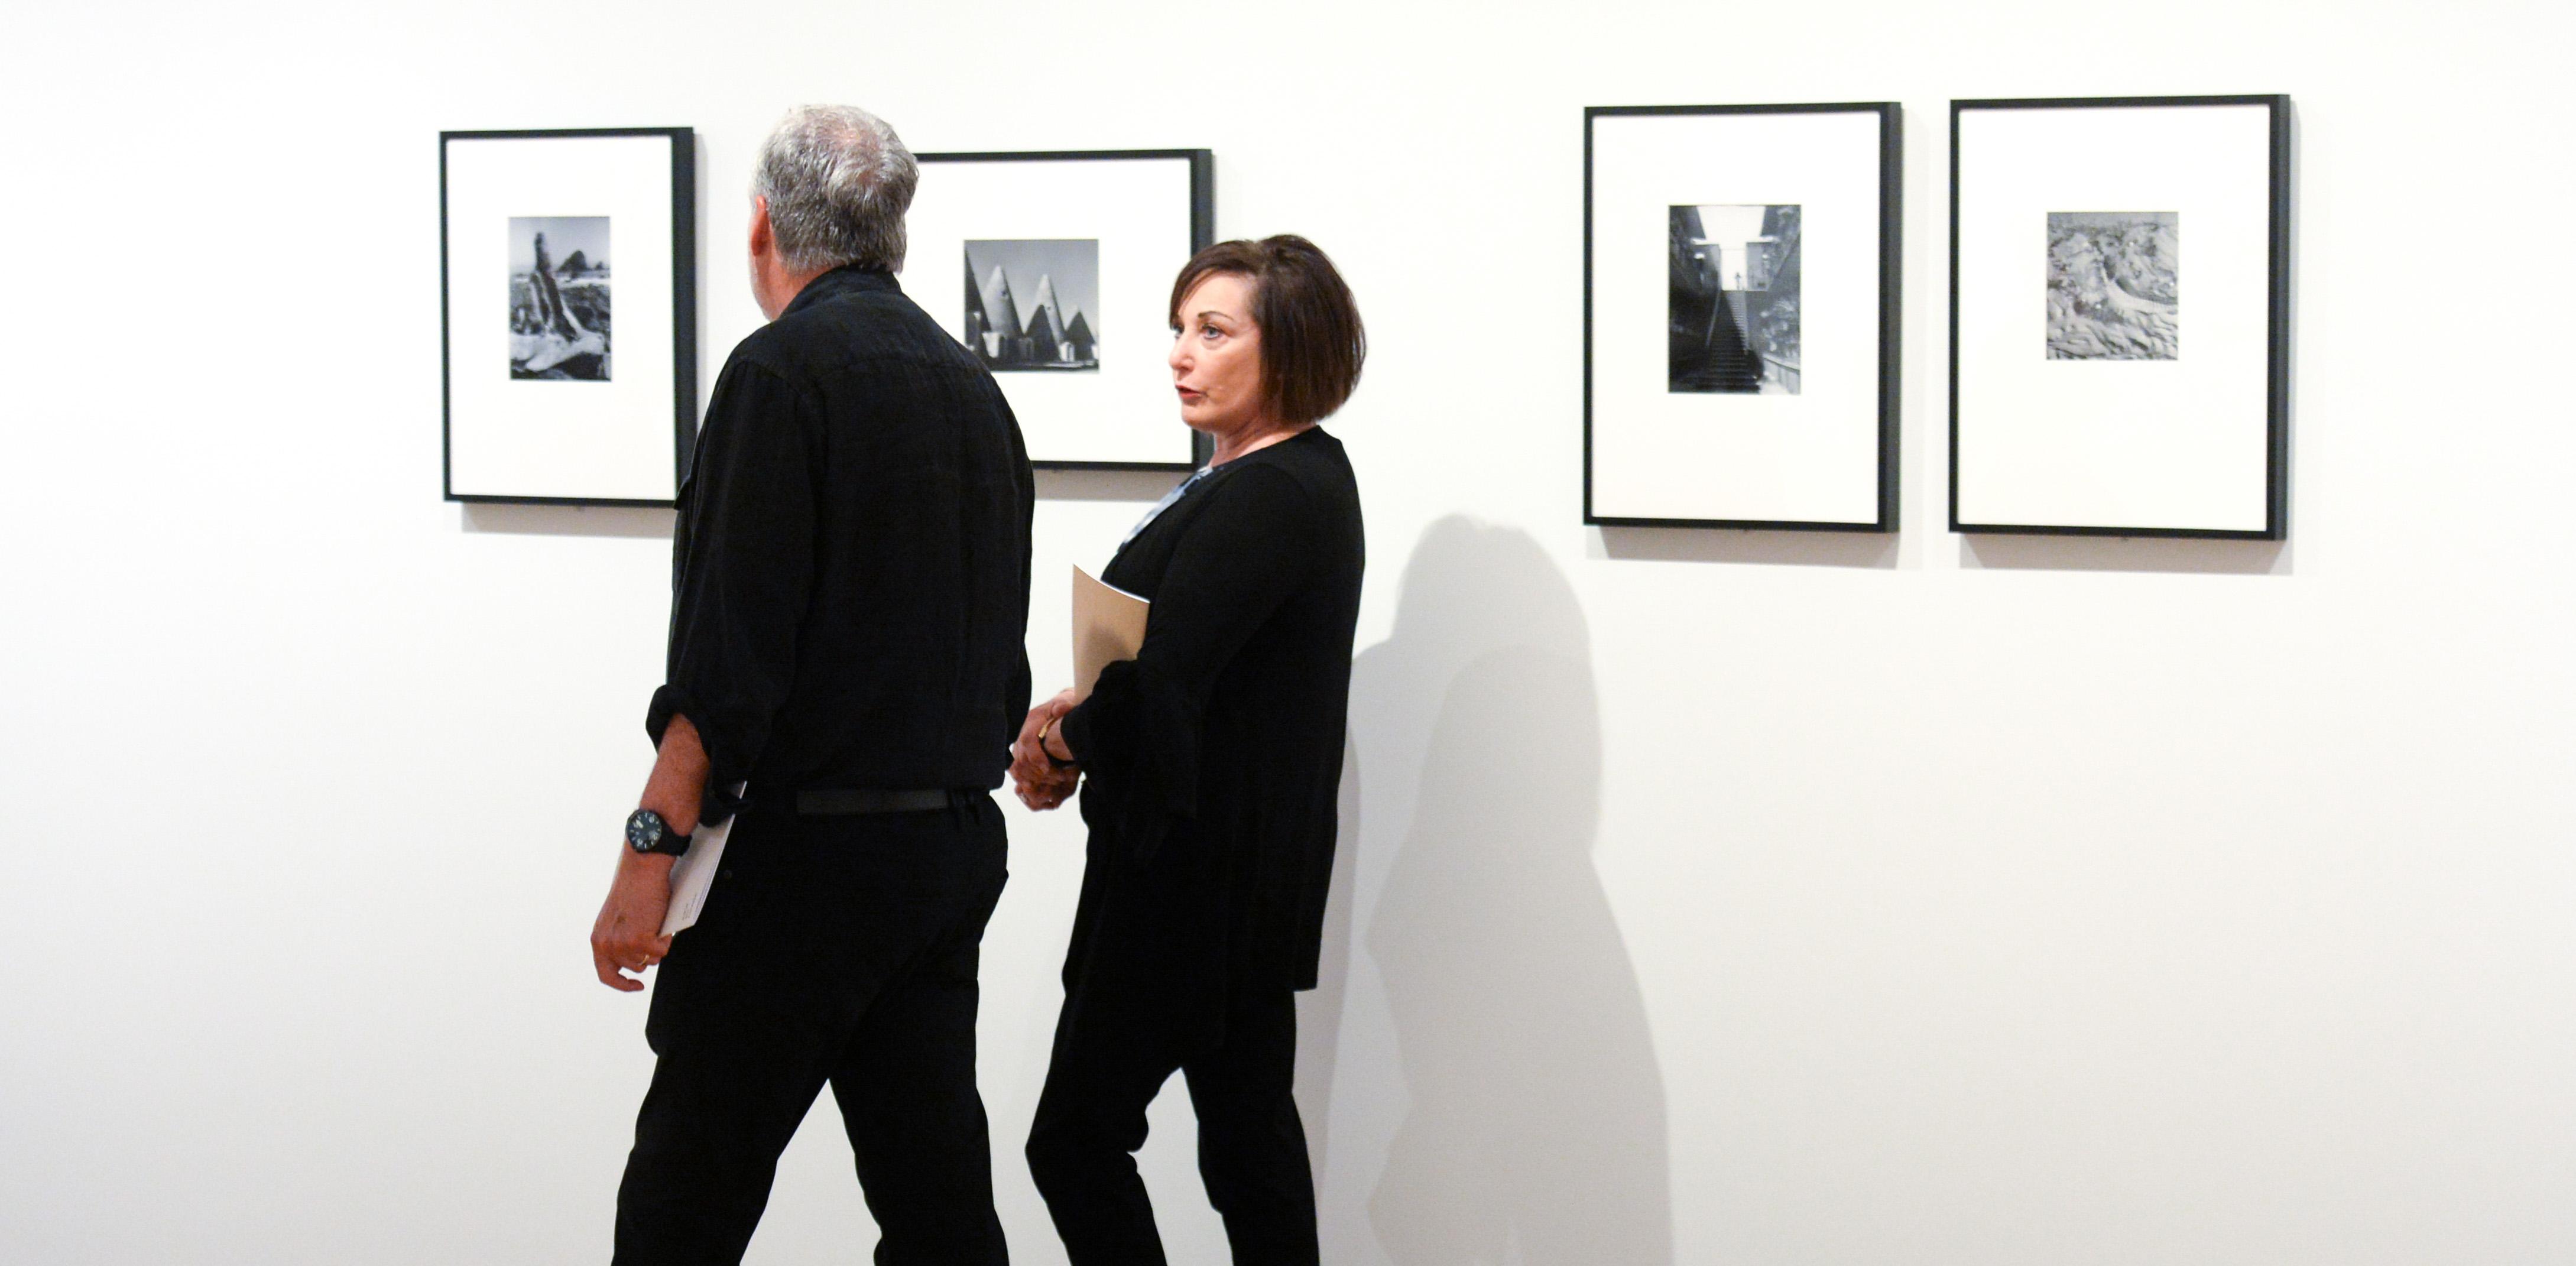 Two visitors walk past four framed black and white photographs by Lola Álvarez Bravo.